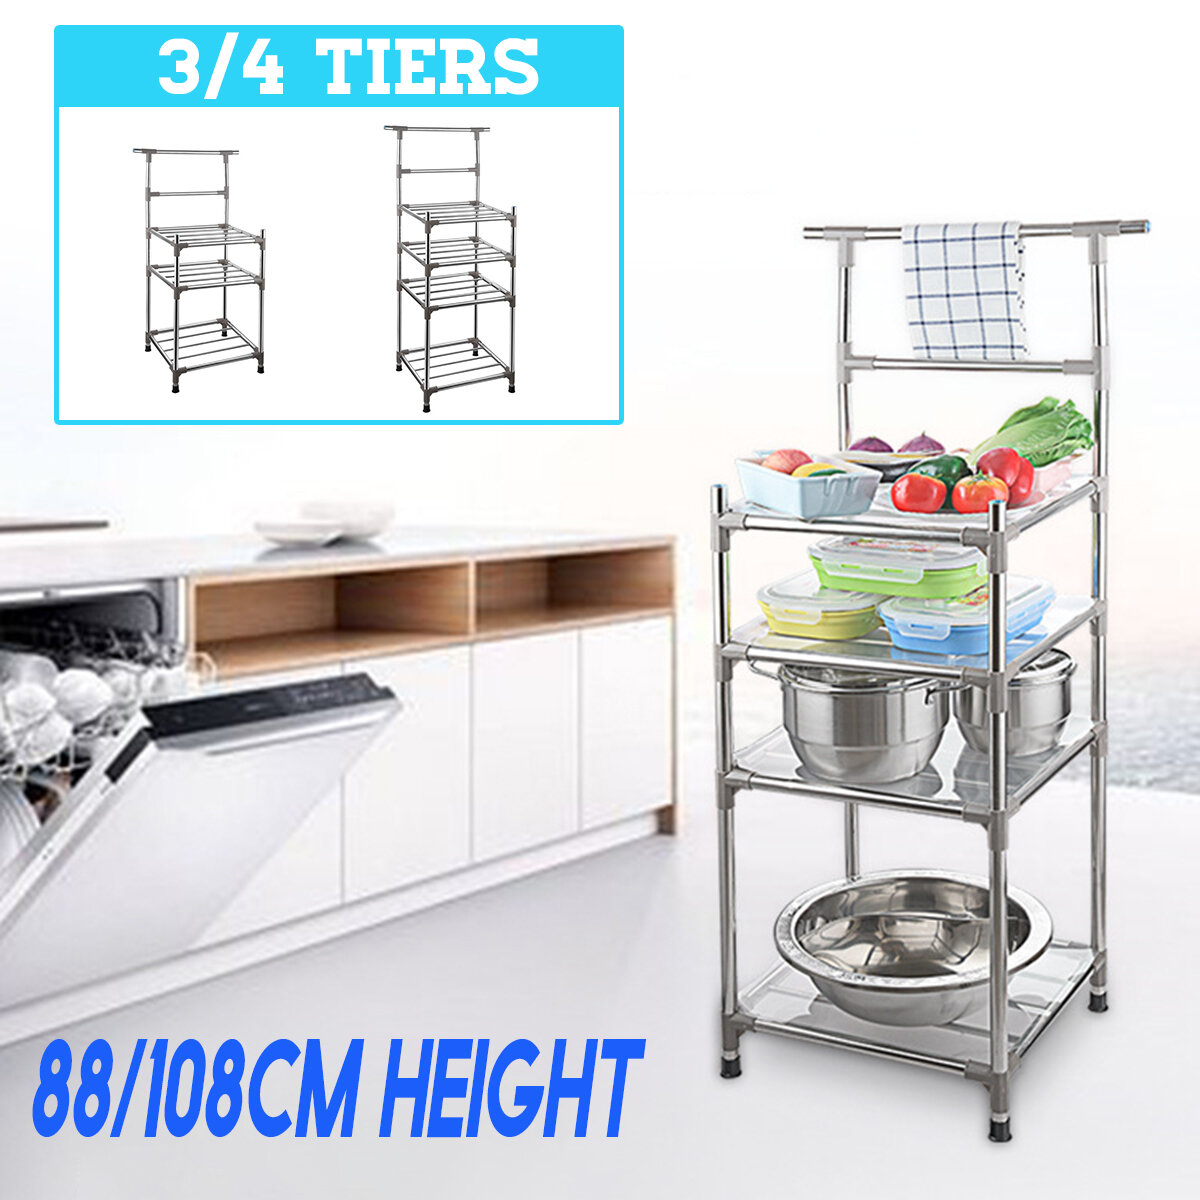 3/4 Tiers Stainless Steel Kitchen Rack Shelves Sheelf Microwave Storage Holder